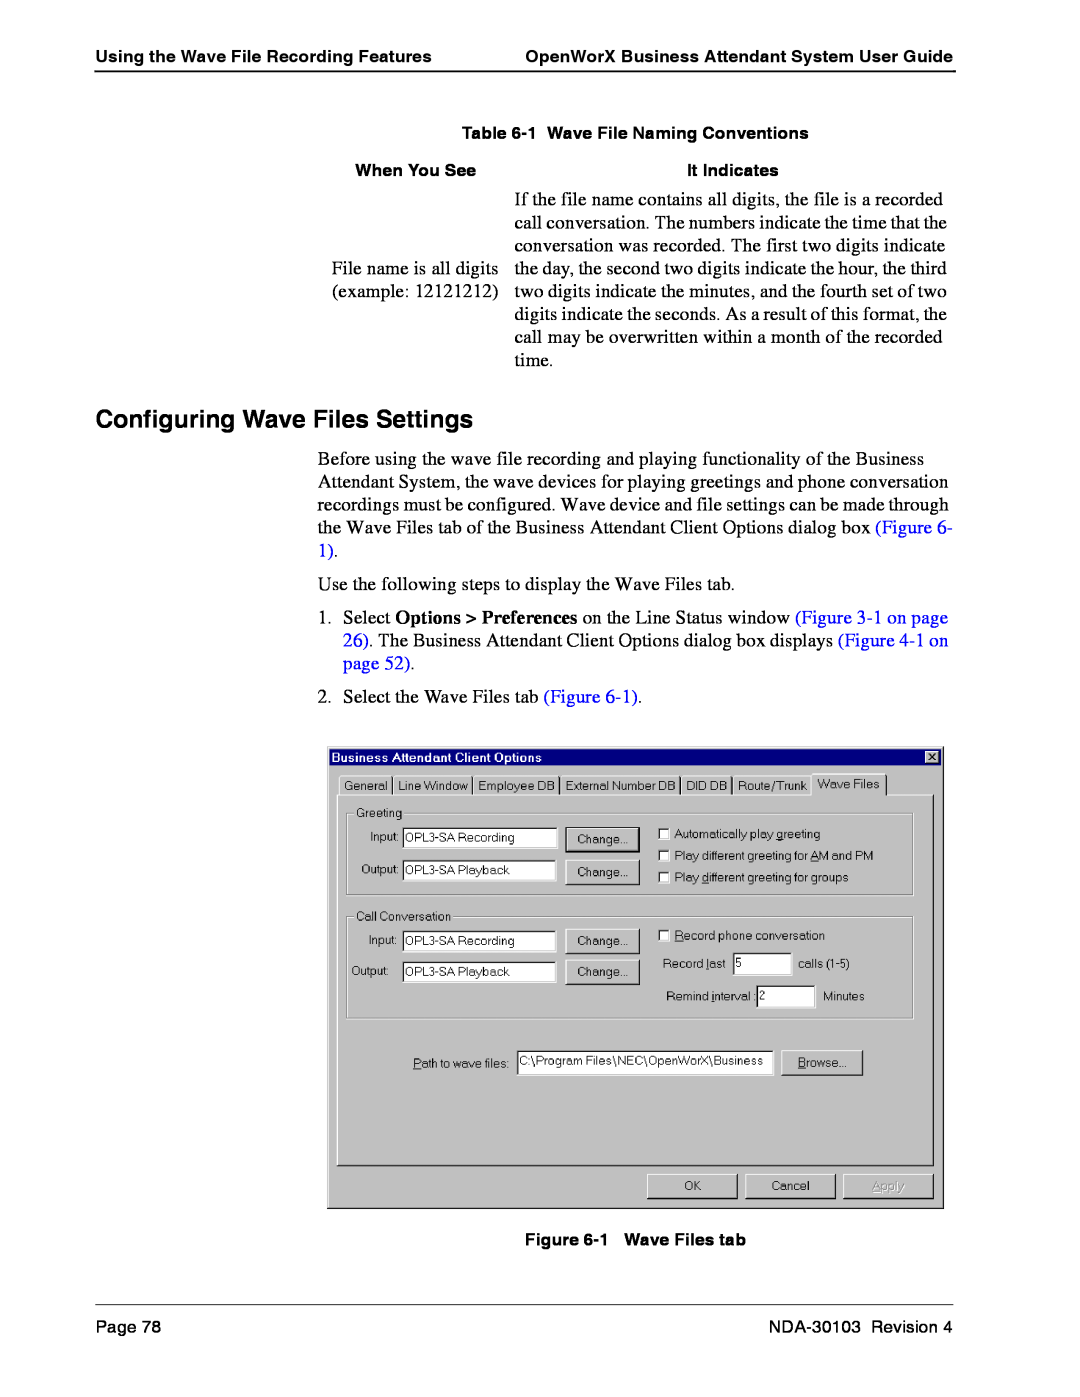 NEC NDA-30103-004 manual Configuring Wave Files Settings 